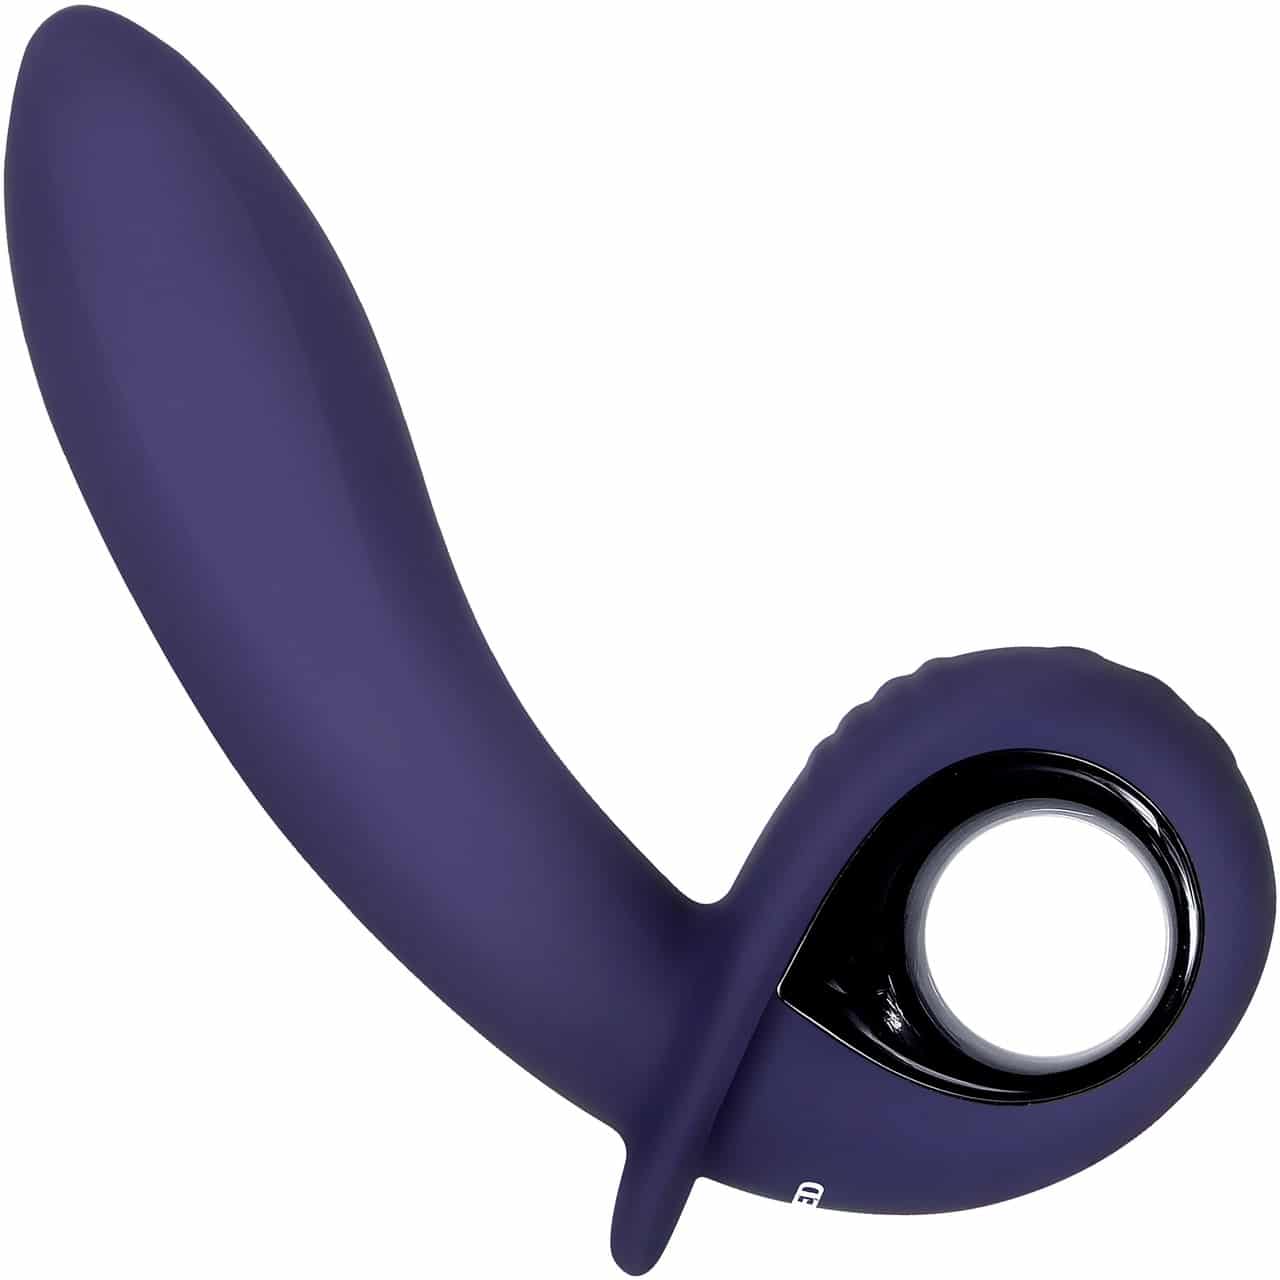 Inflatable Silicone G-Spot Vibrator By Evolved Novelties. Slide 5